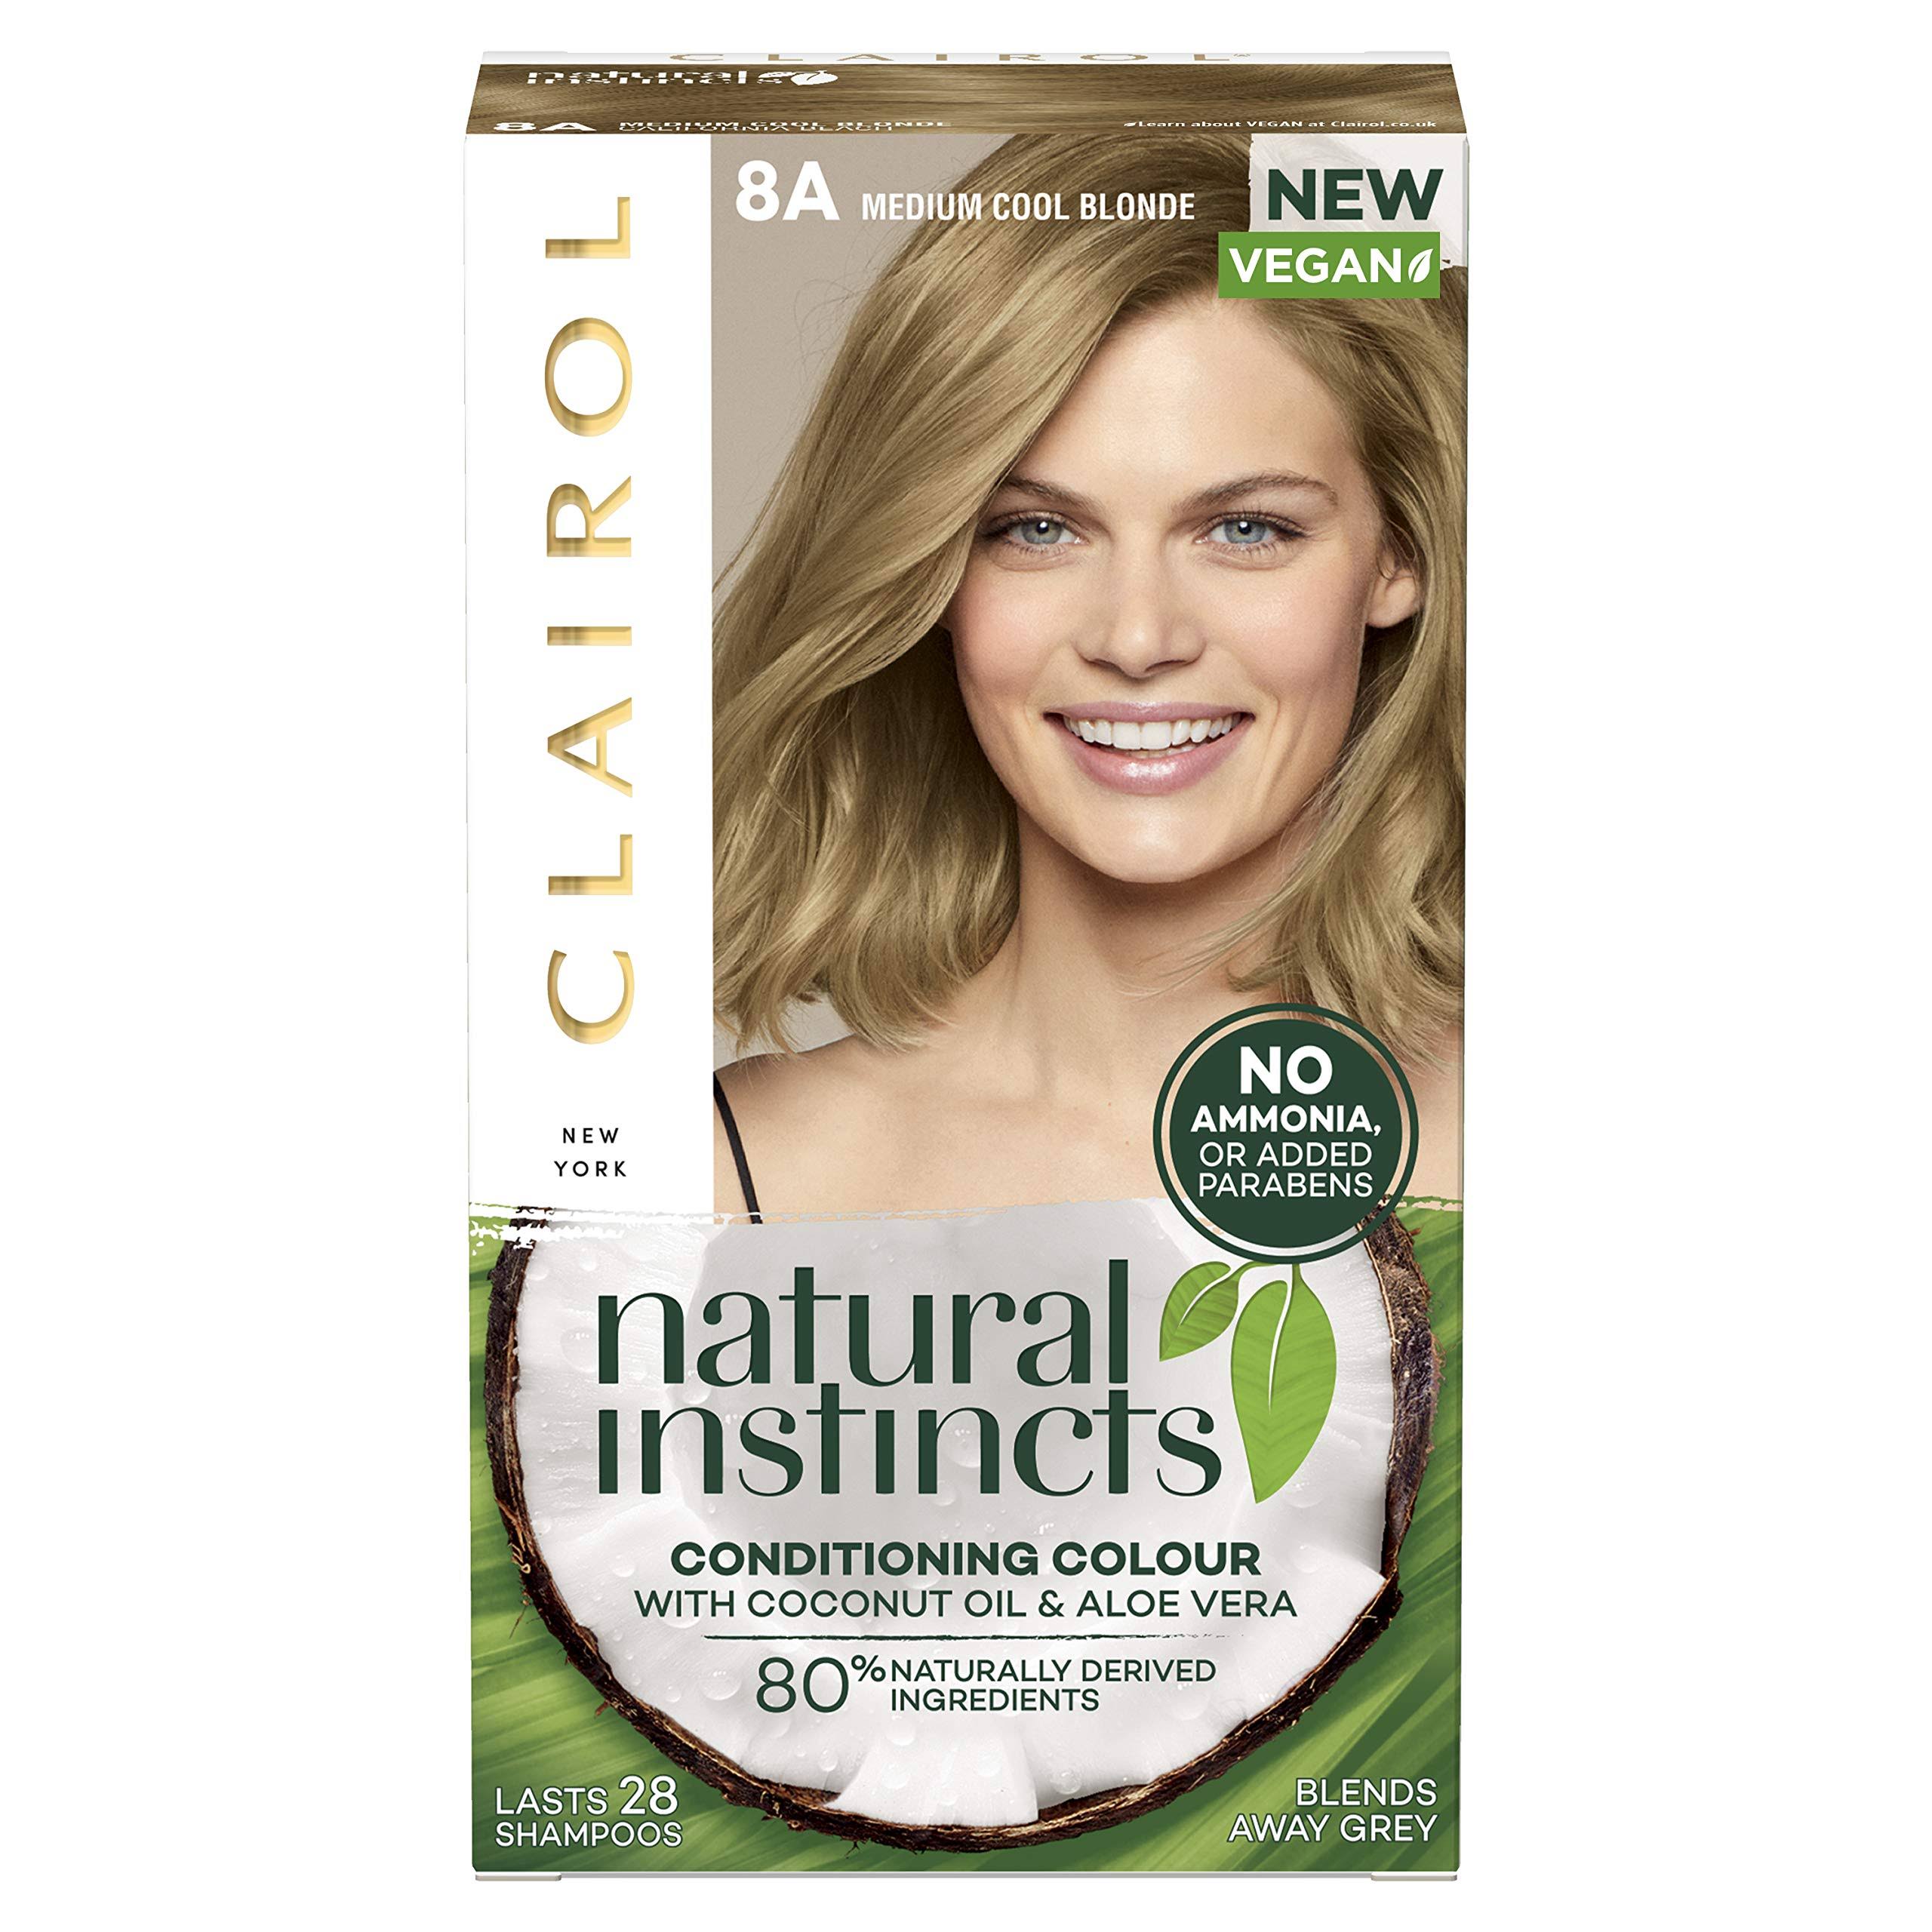 Clairol Natural Instincts Semi-Permanent No Ammonia Vegan Hair Dye 8A Medium Cool Blonde